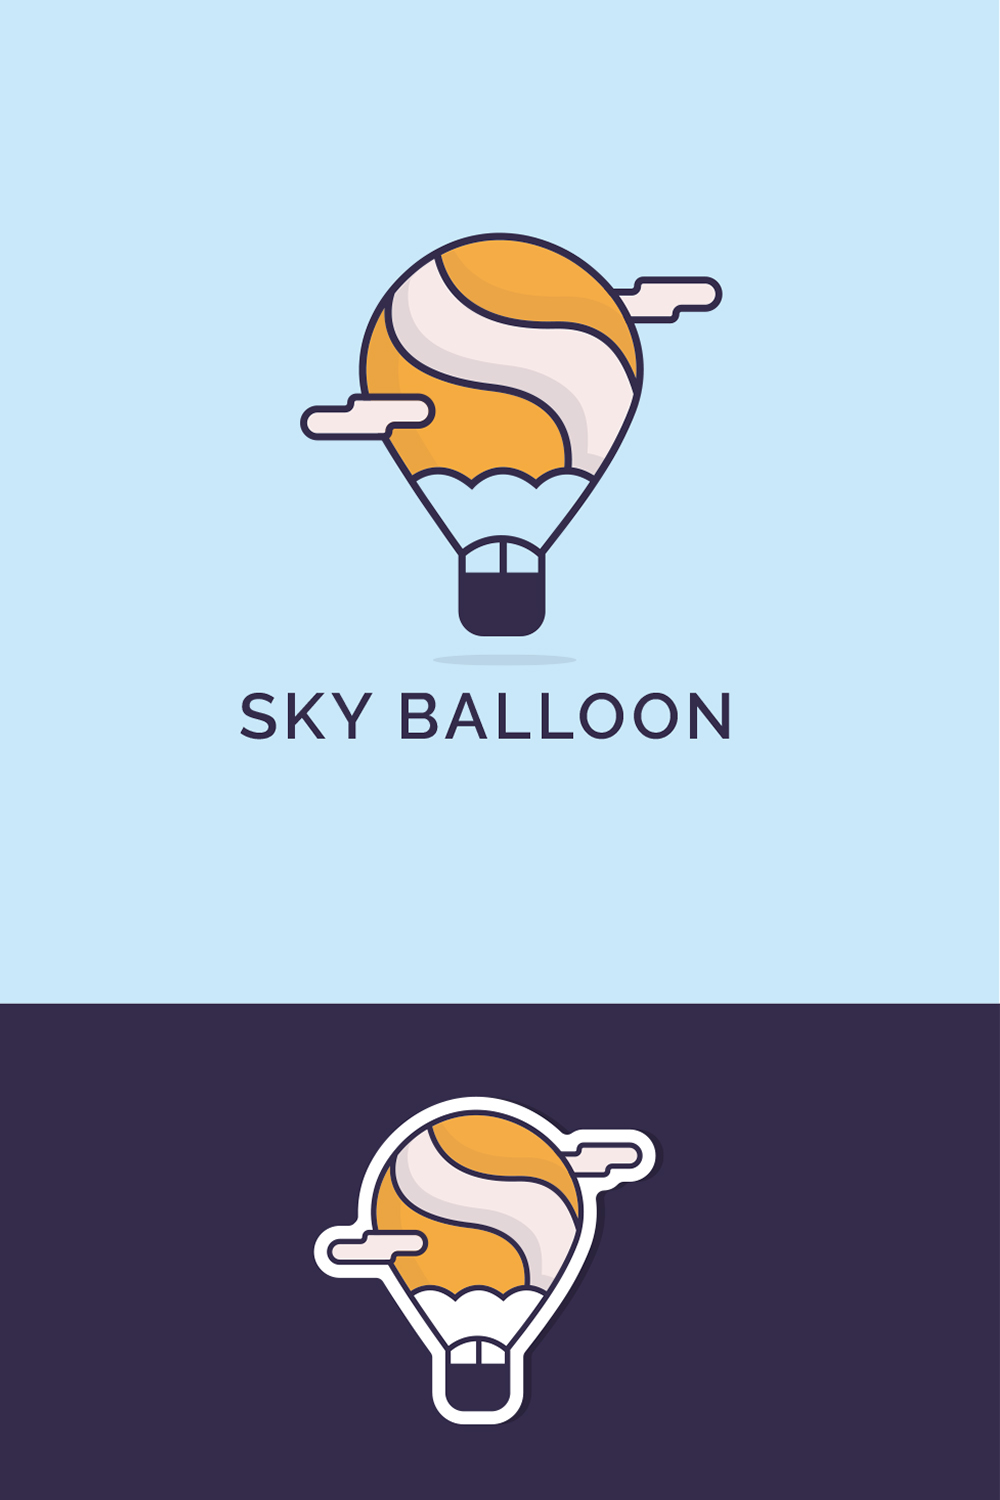 air balloon travel logo pinterest preview image.